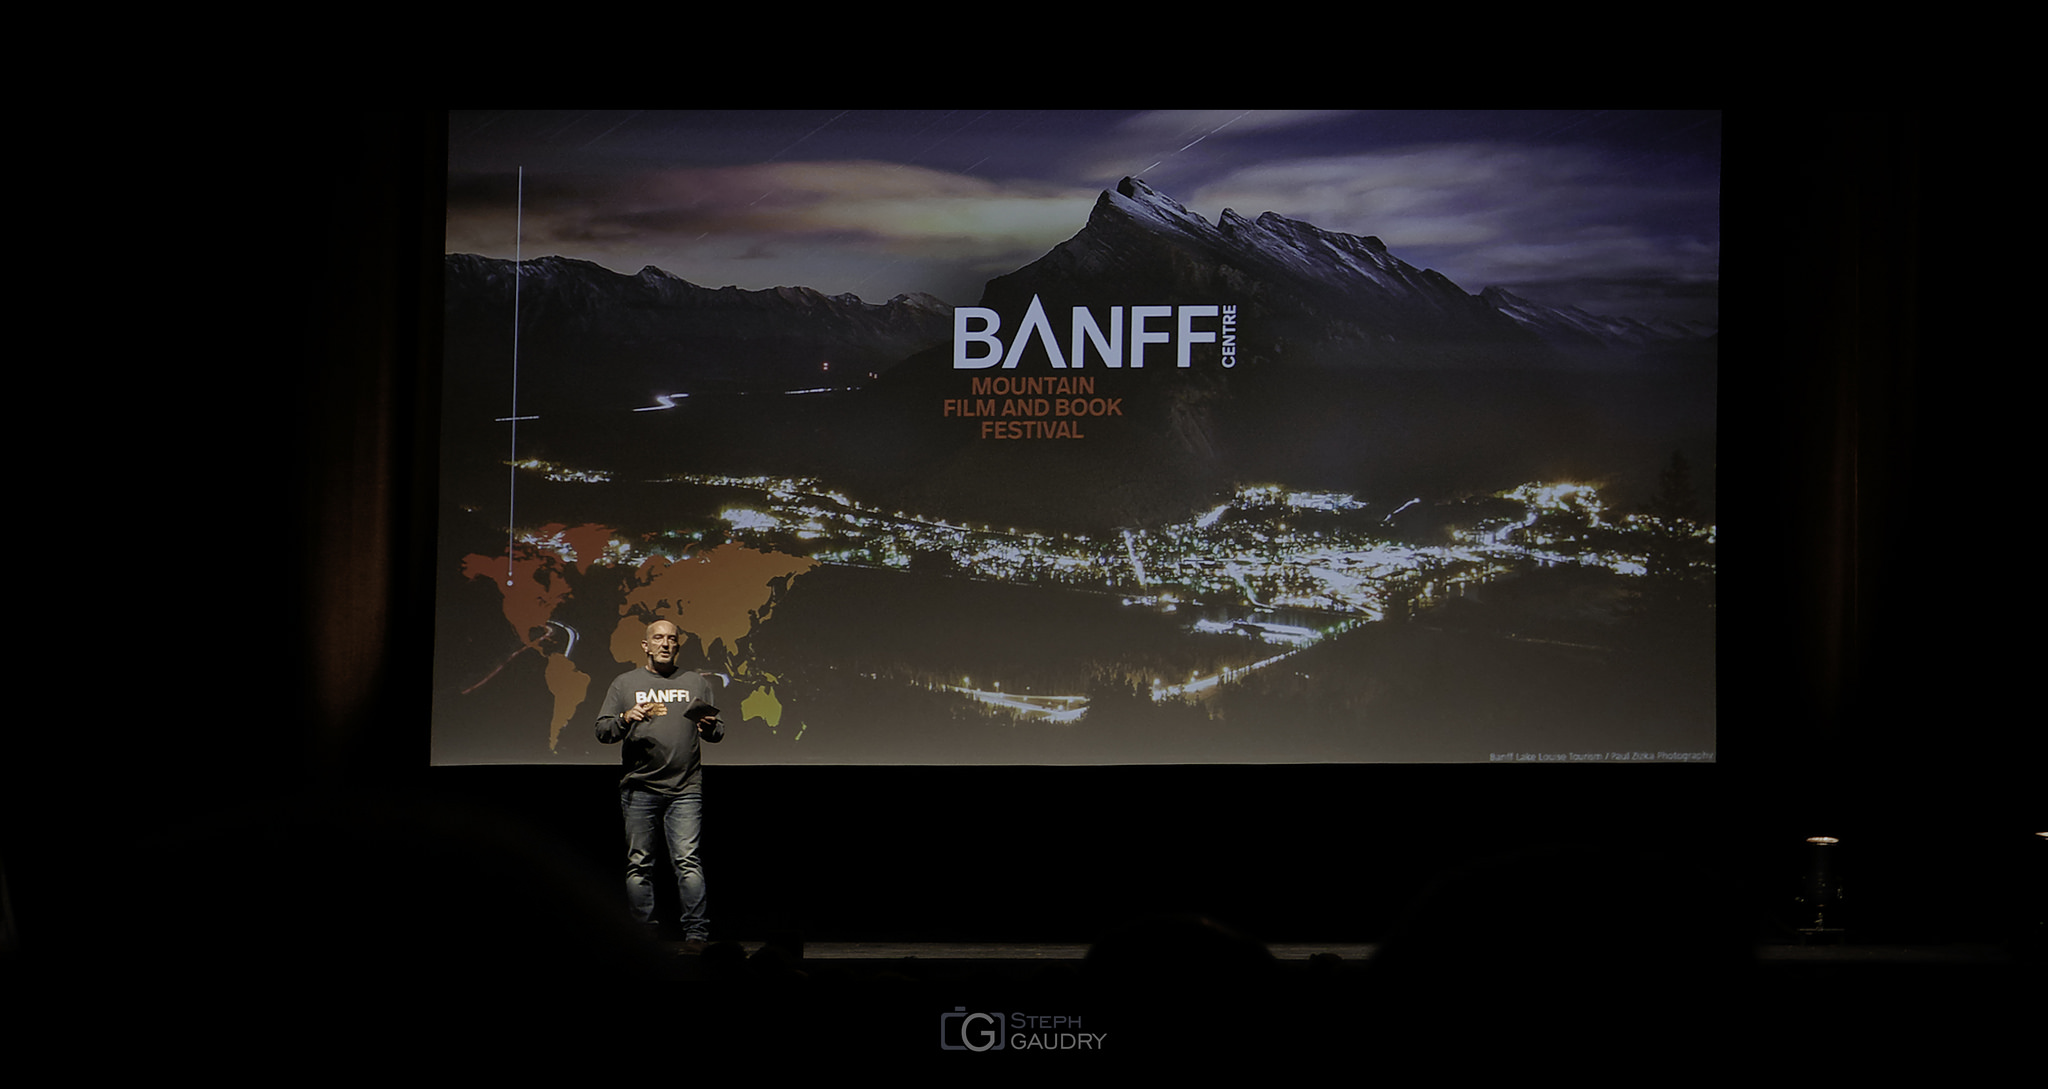 BANFF Mountain film and book festival [Cliquez pour lancer le diaporama]